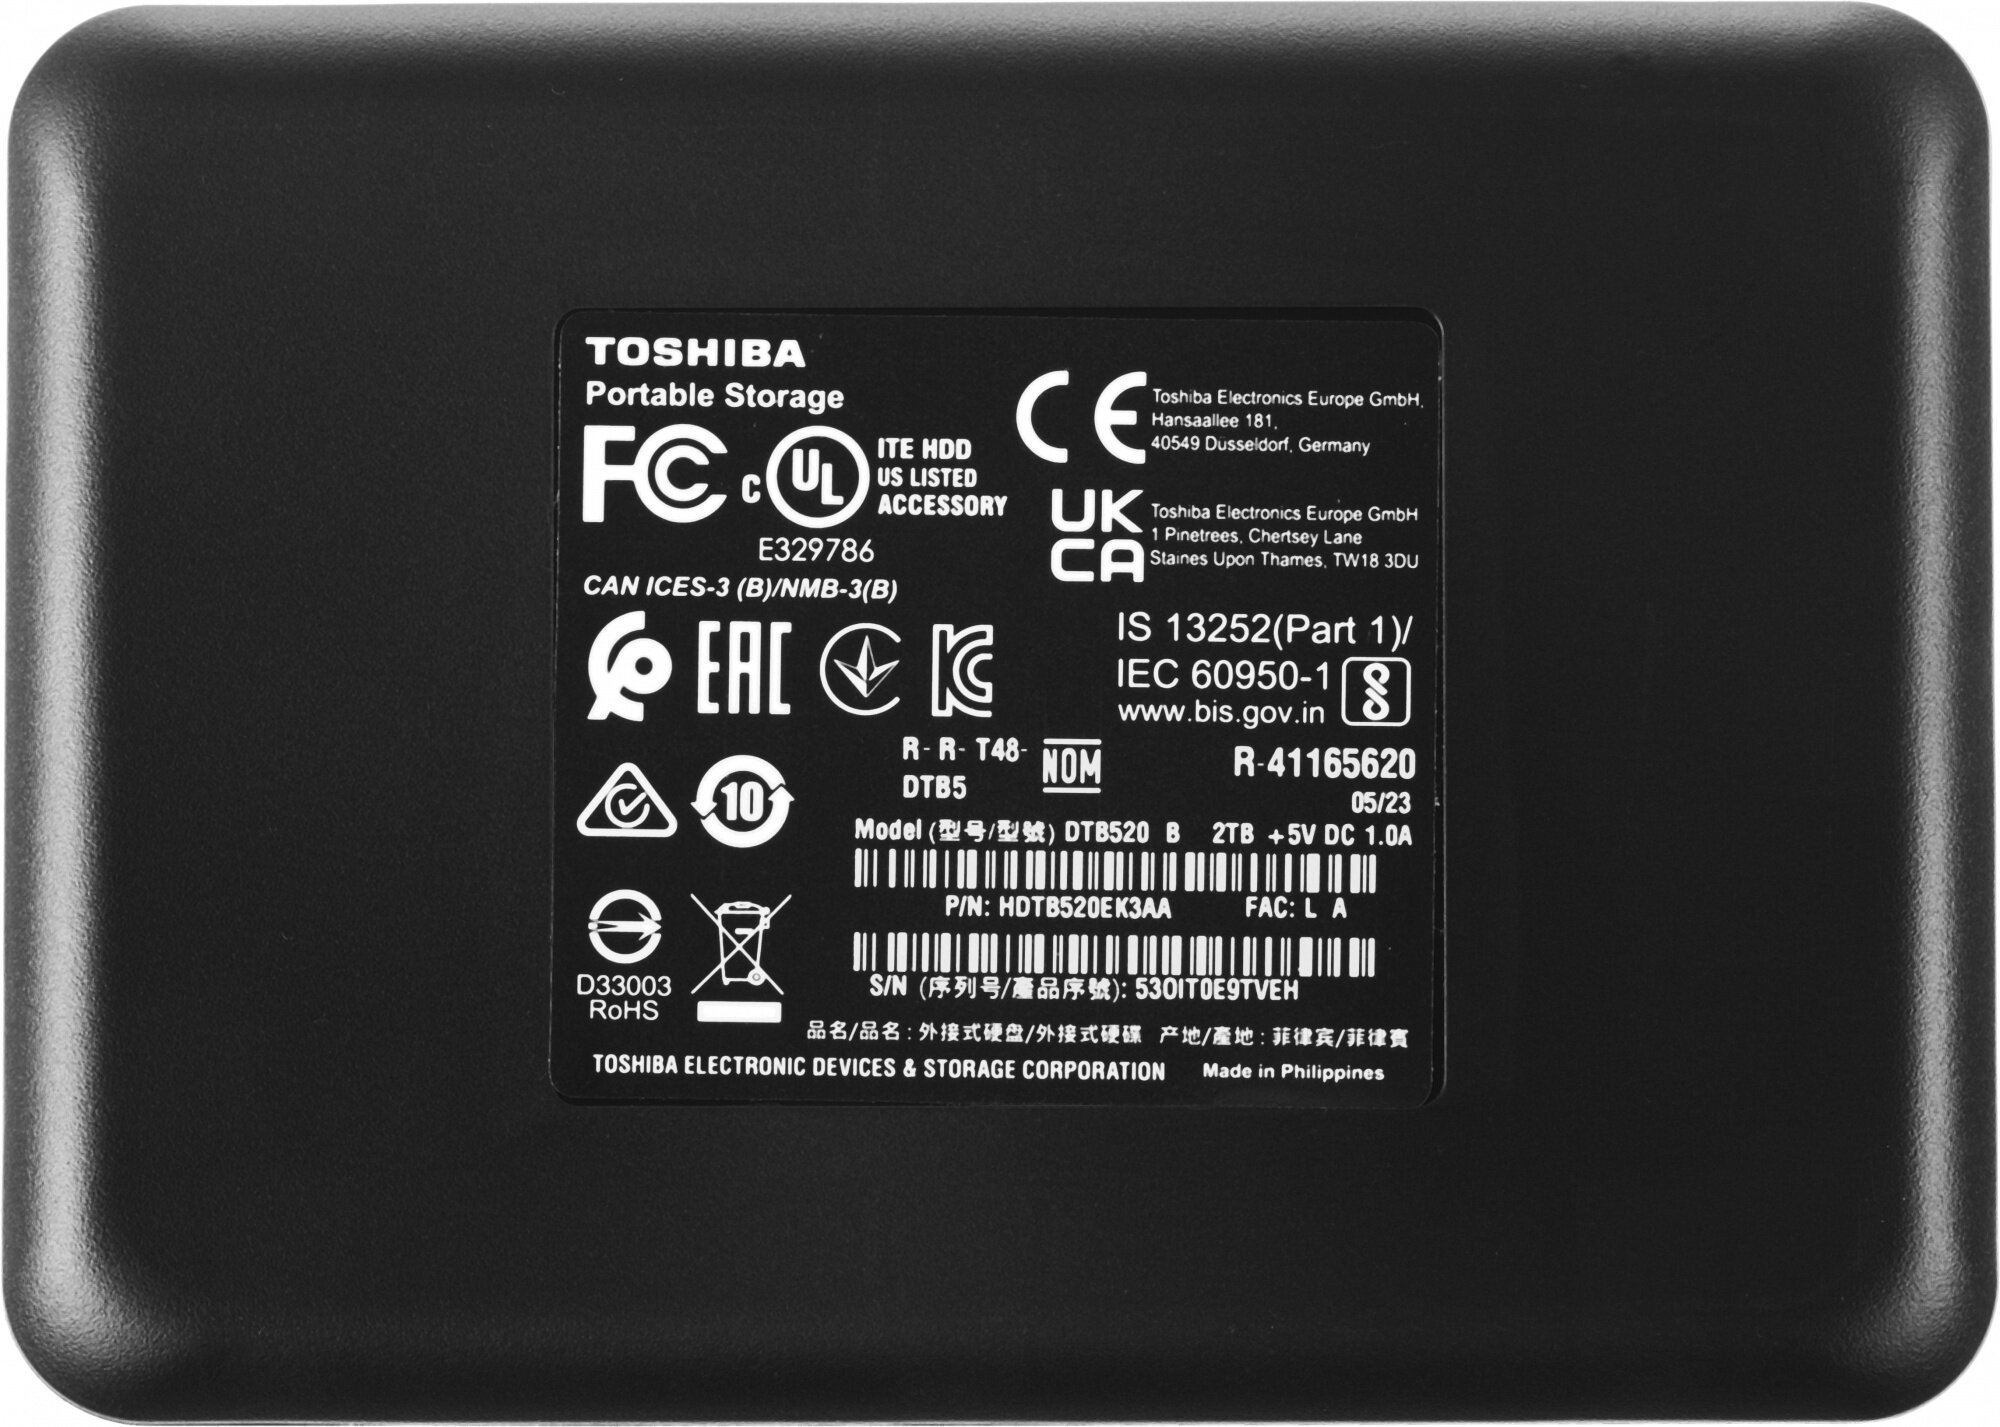 Внешний жесткий диск Toshiba CANVIO BASICS 25 2TB black